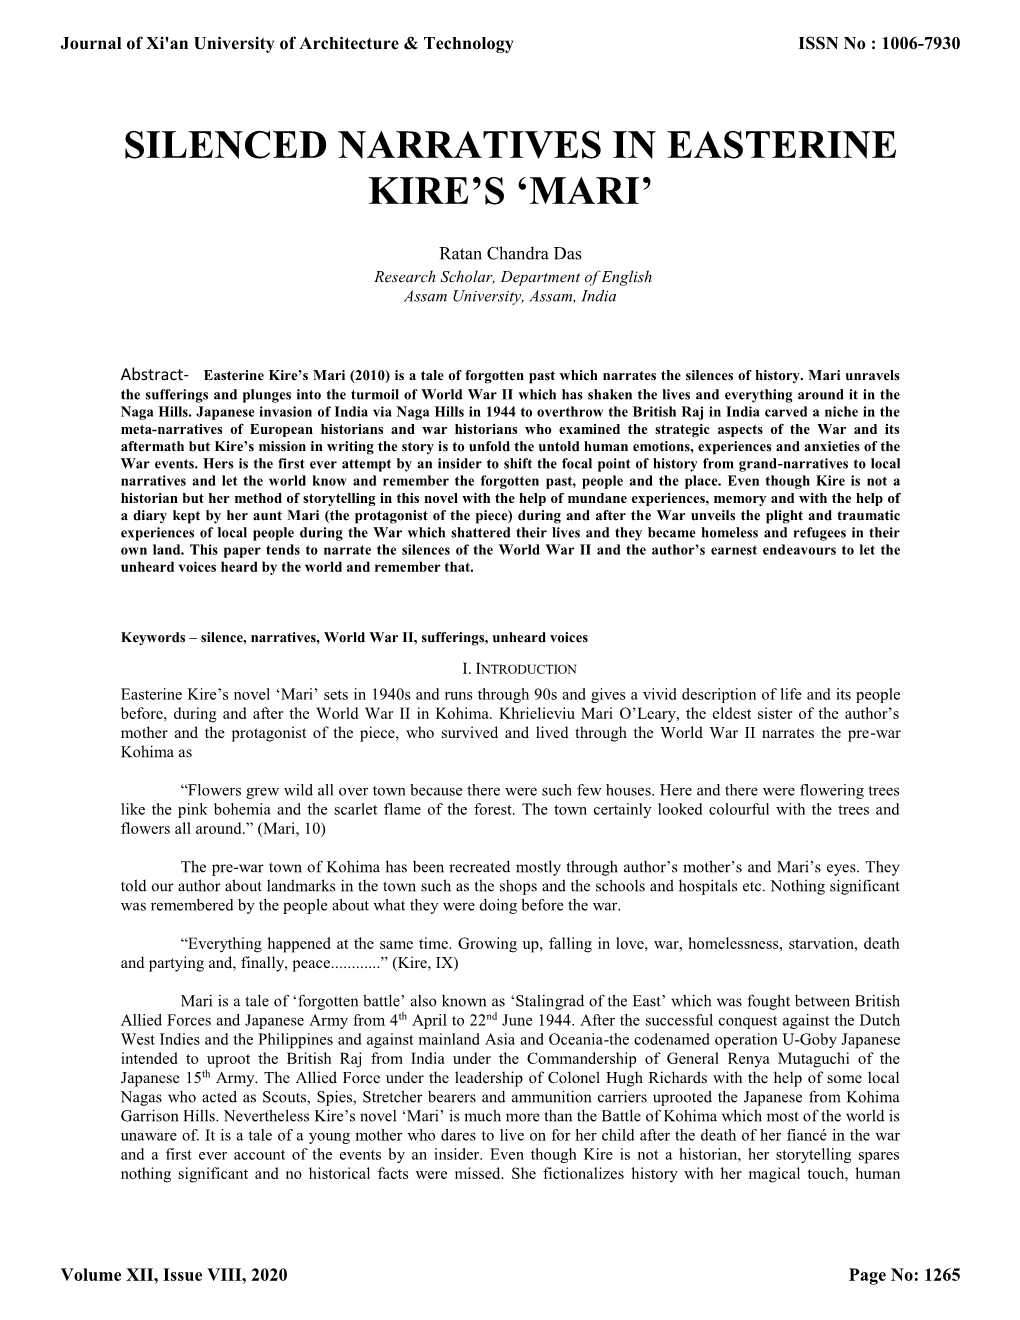 Silenced Narratives in Easterine Kire's 'Mari'